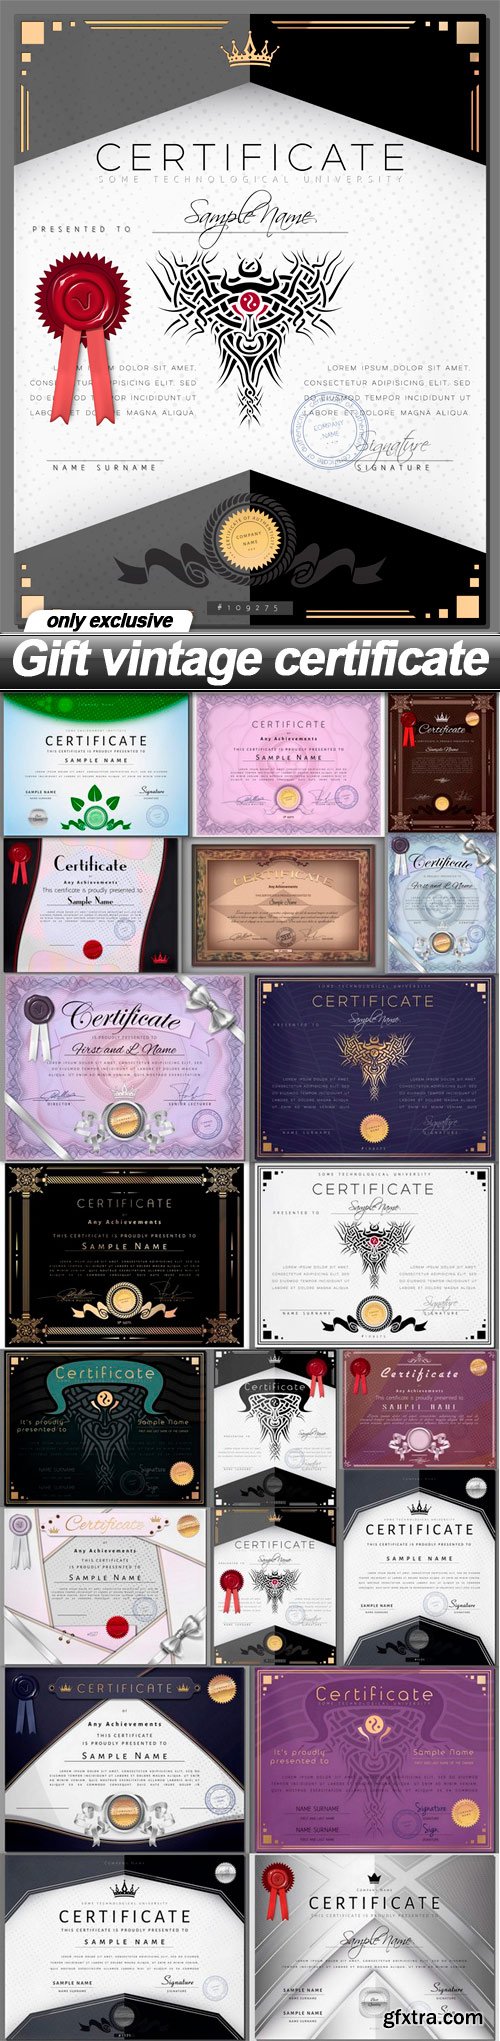 Gift vintage certificate - 20 EPS